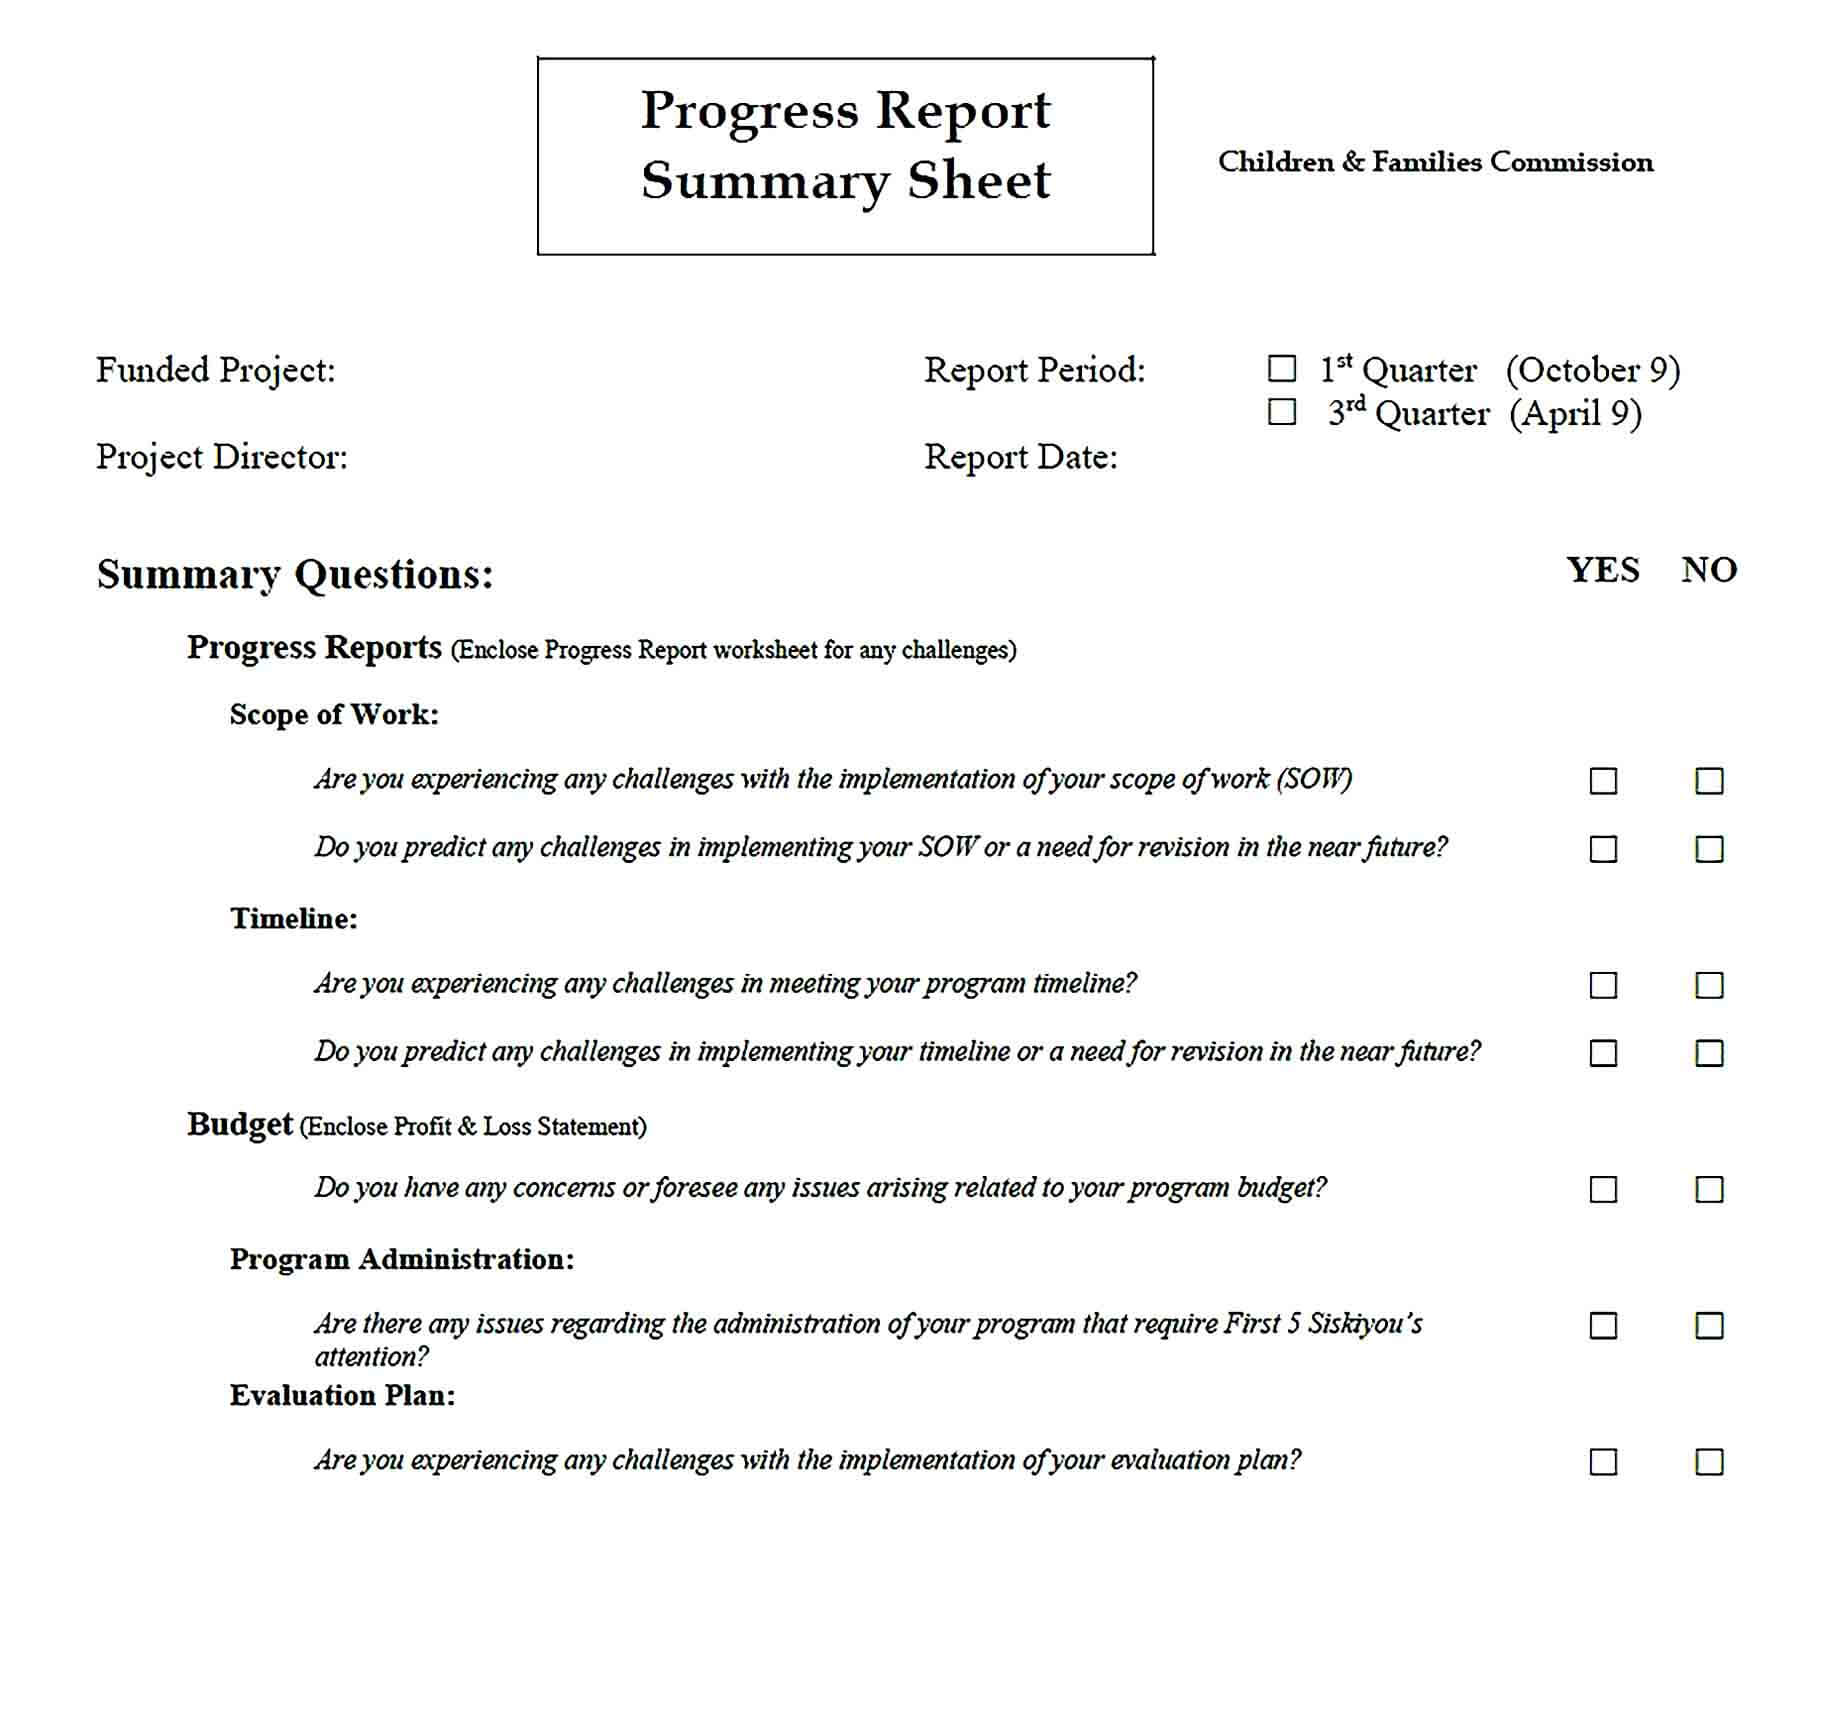 Sample Progress Report Summary Sheet